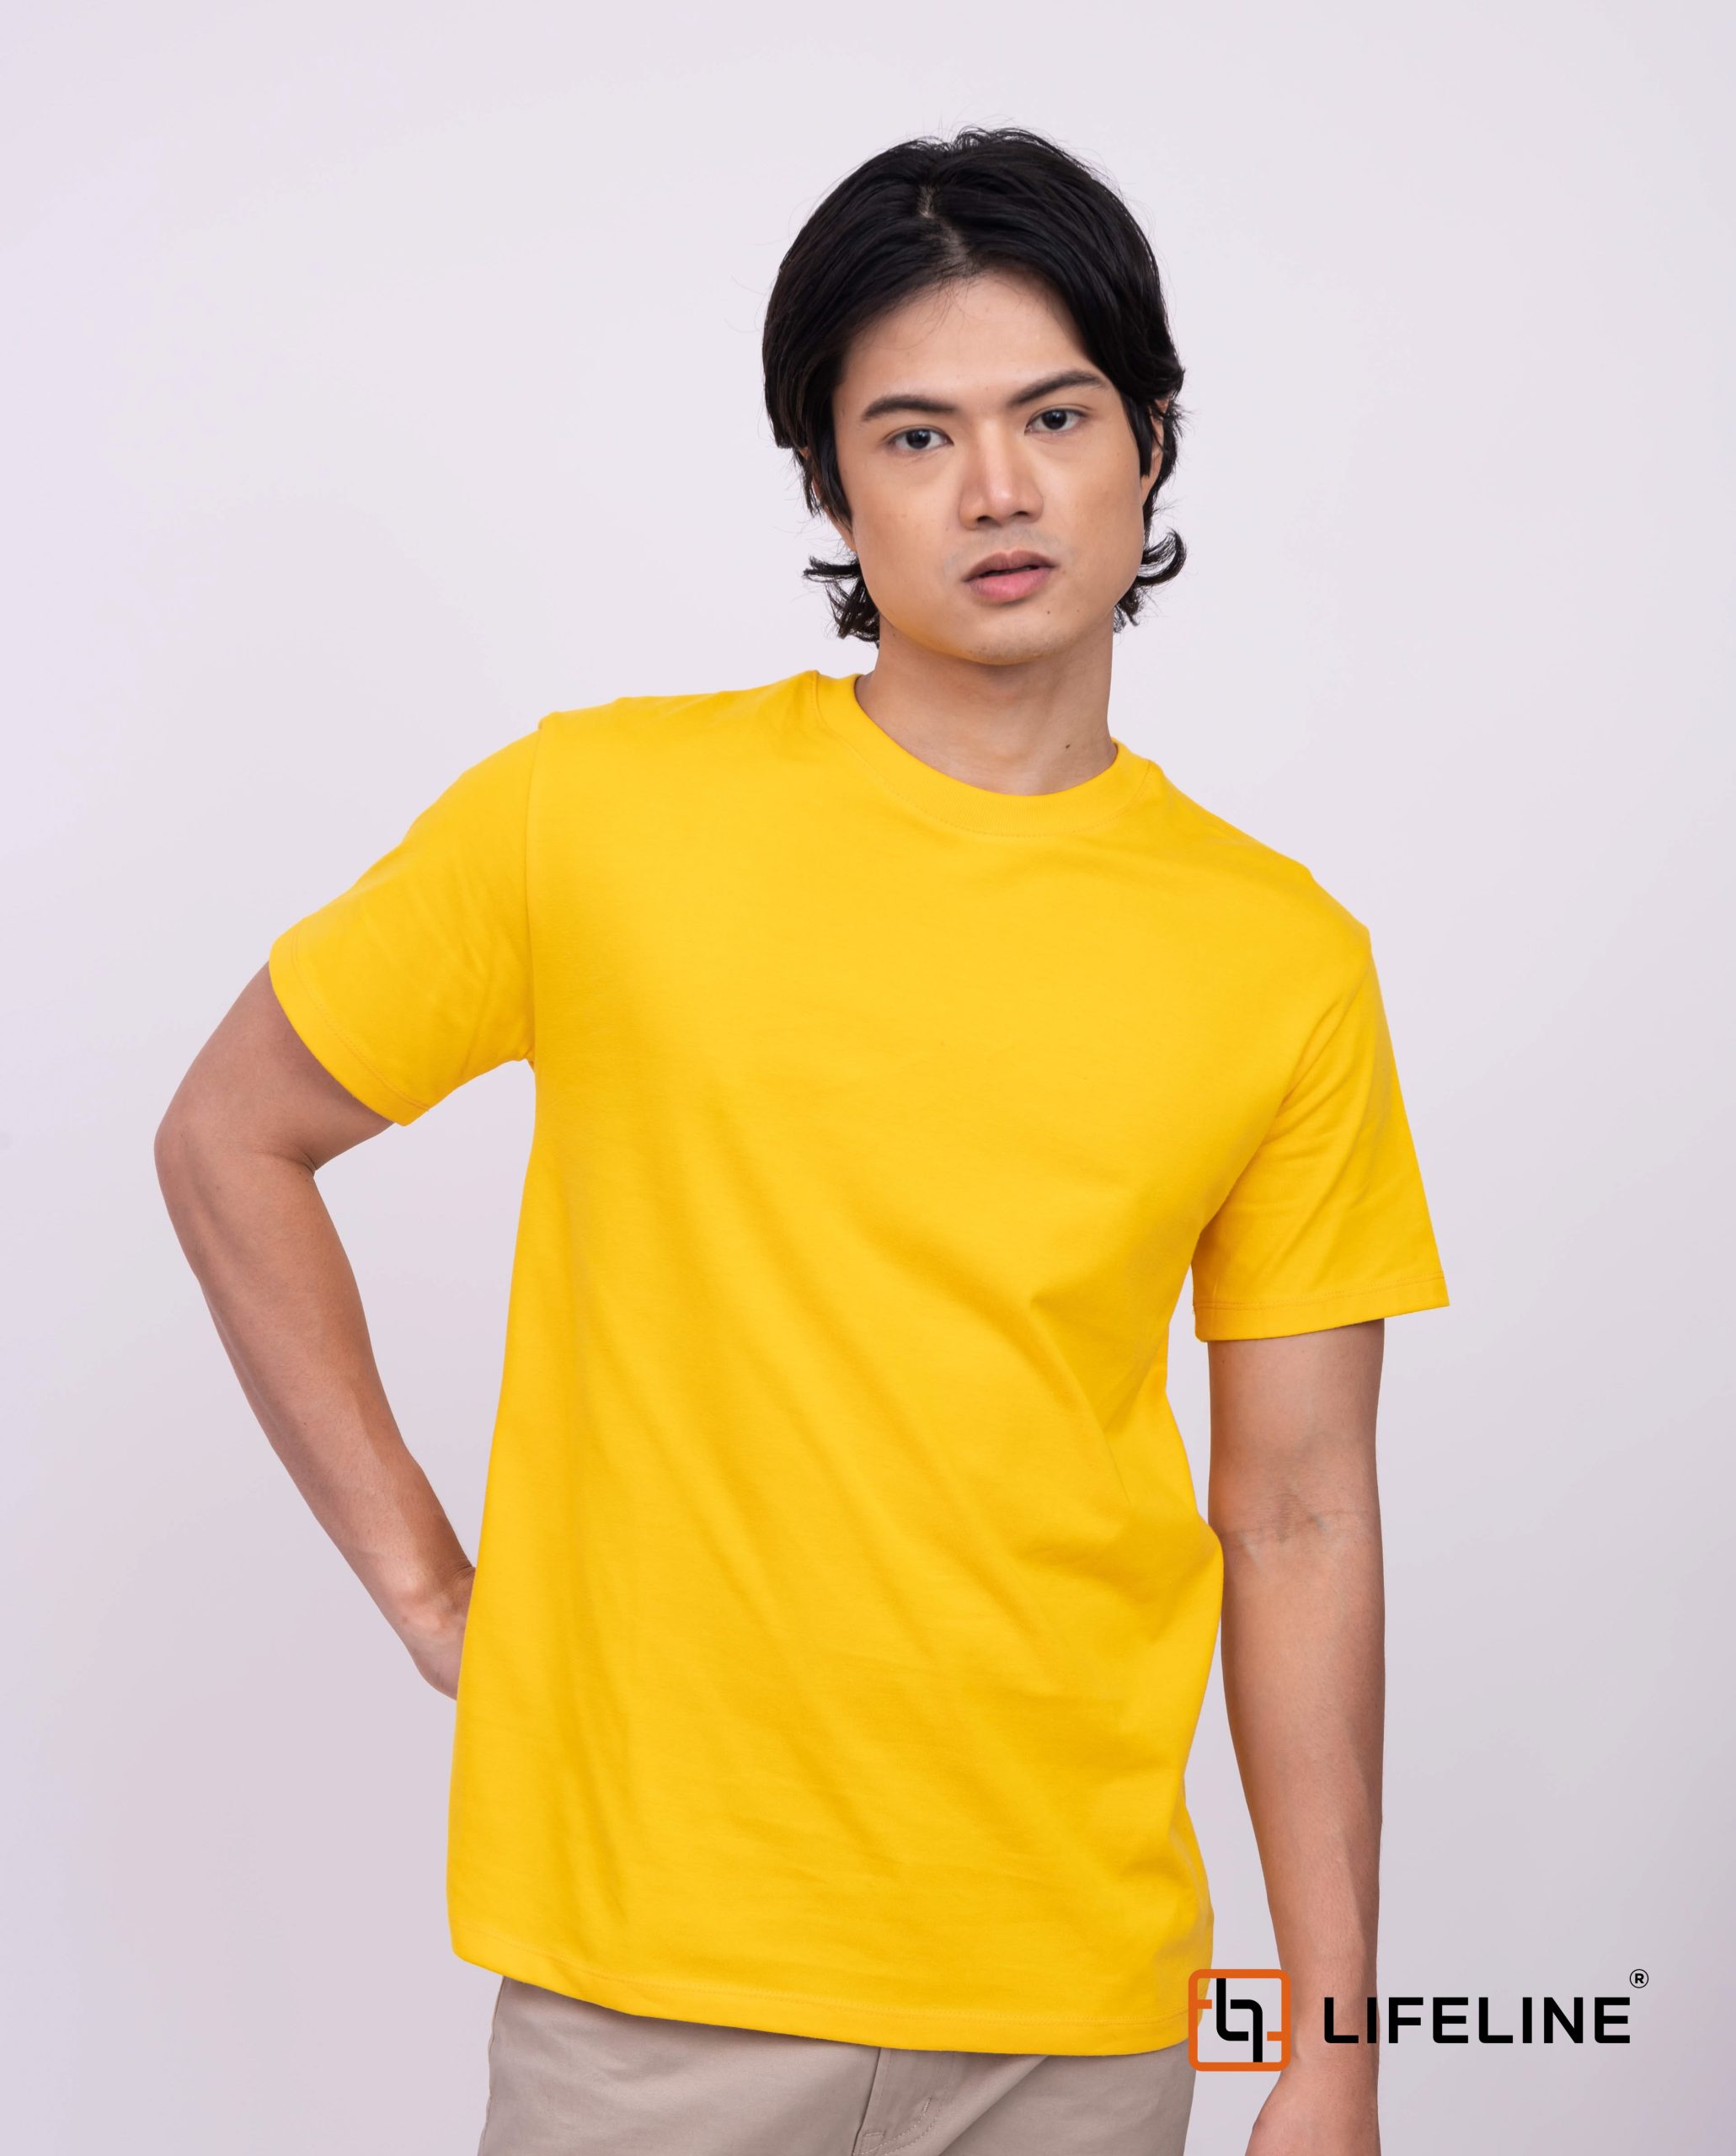 Lifeline Roundneck T-shirt (Gold Yellow) For Sale - Lifeline Shirts